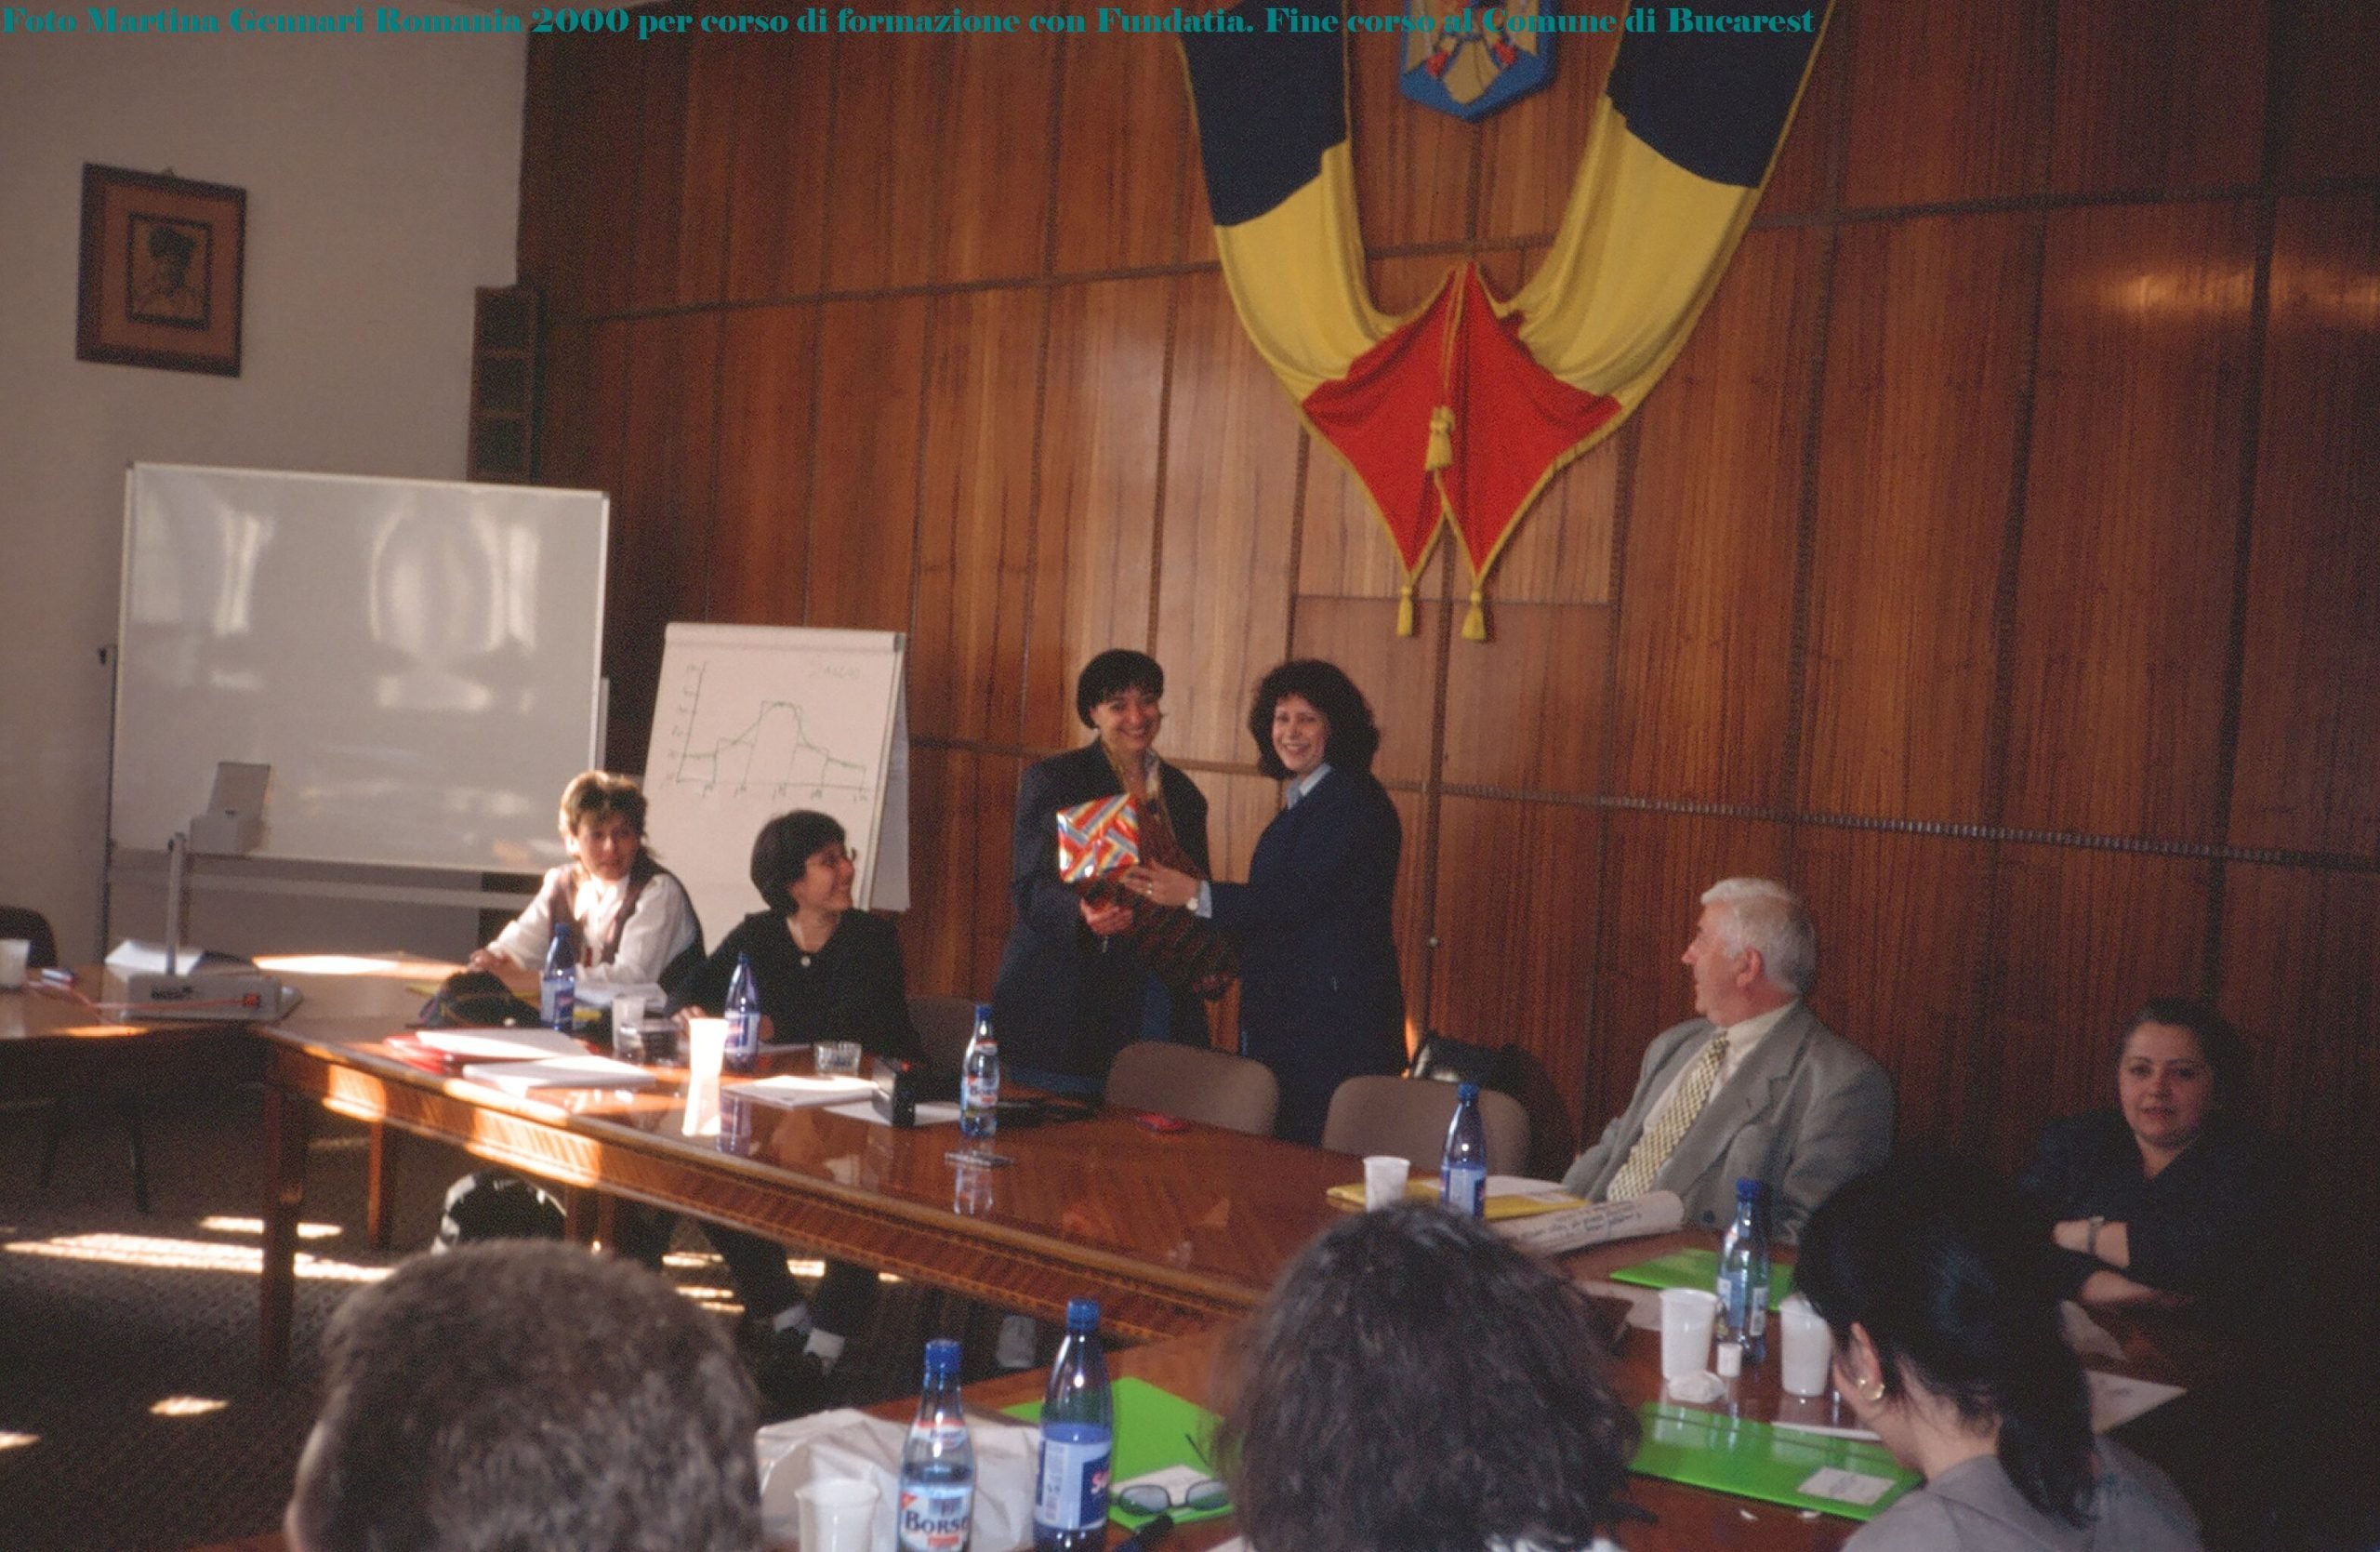 Martina Gennari - Romania 2000